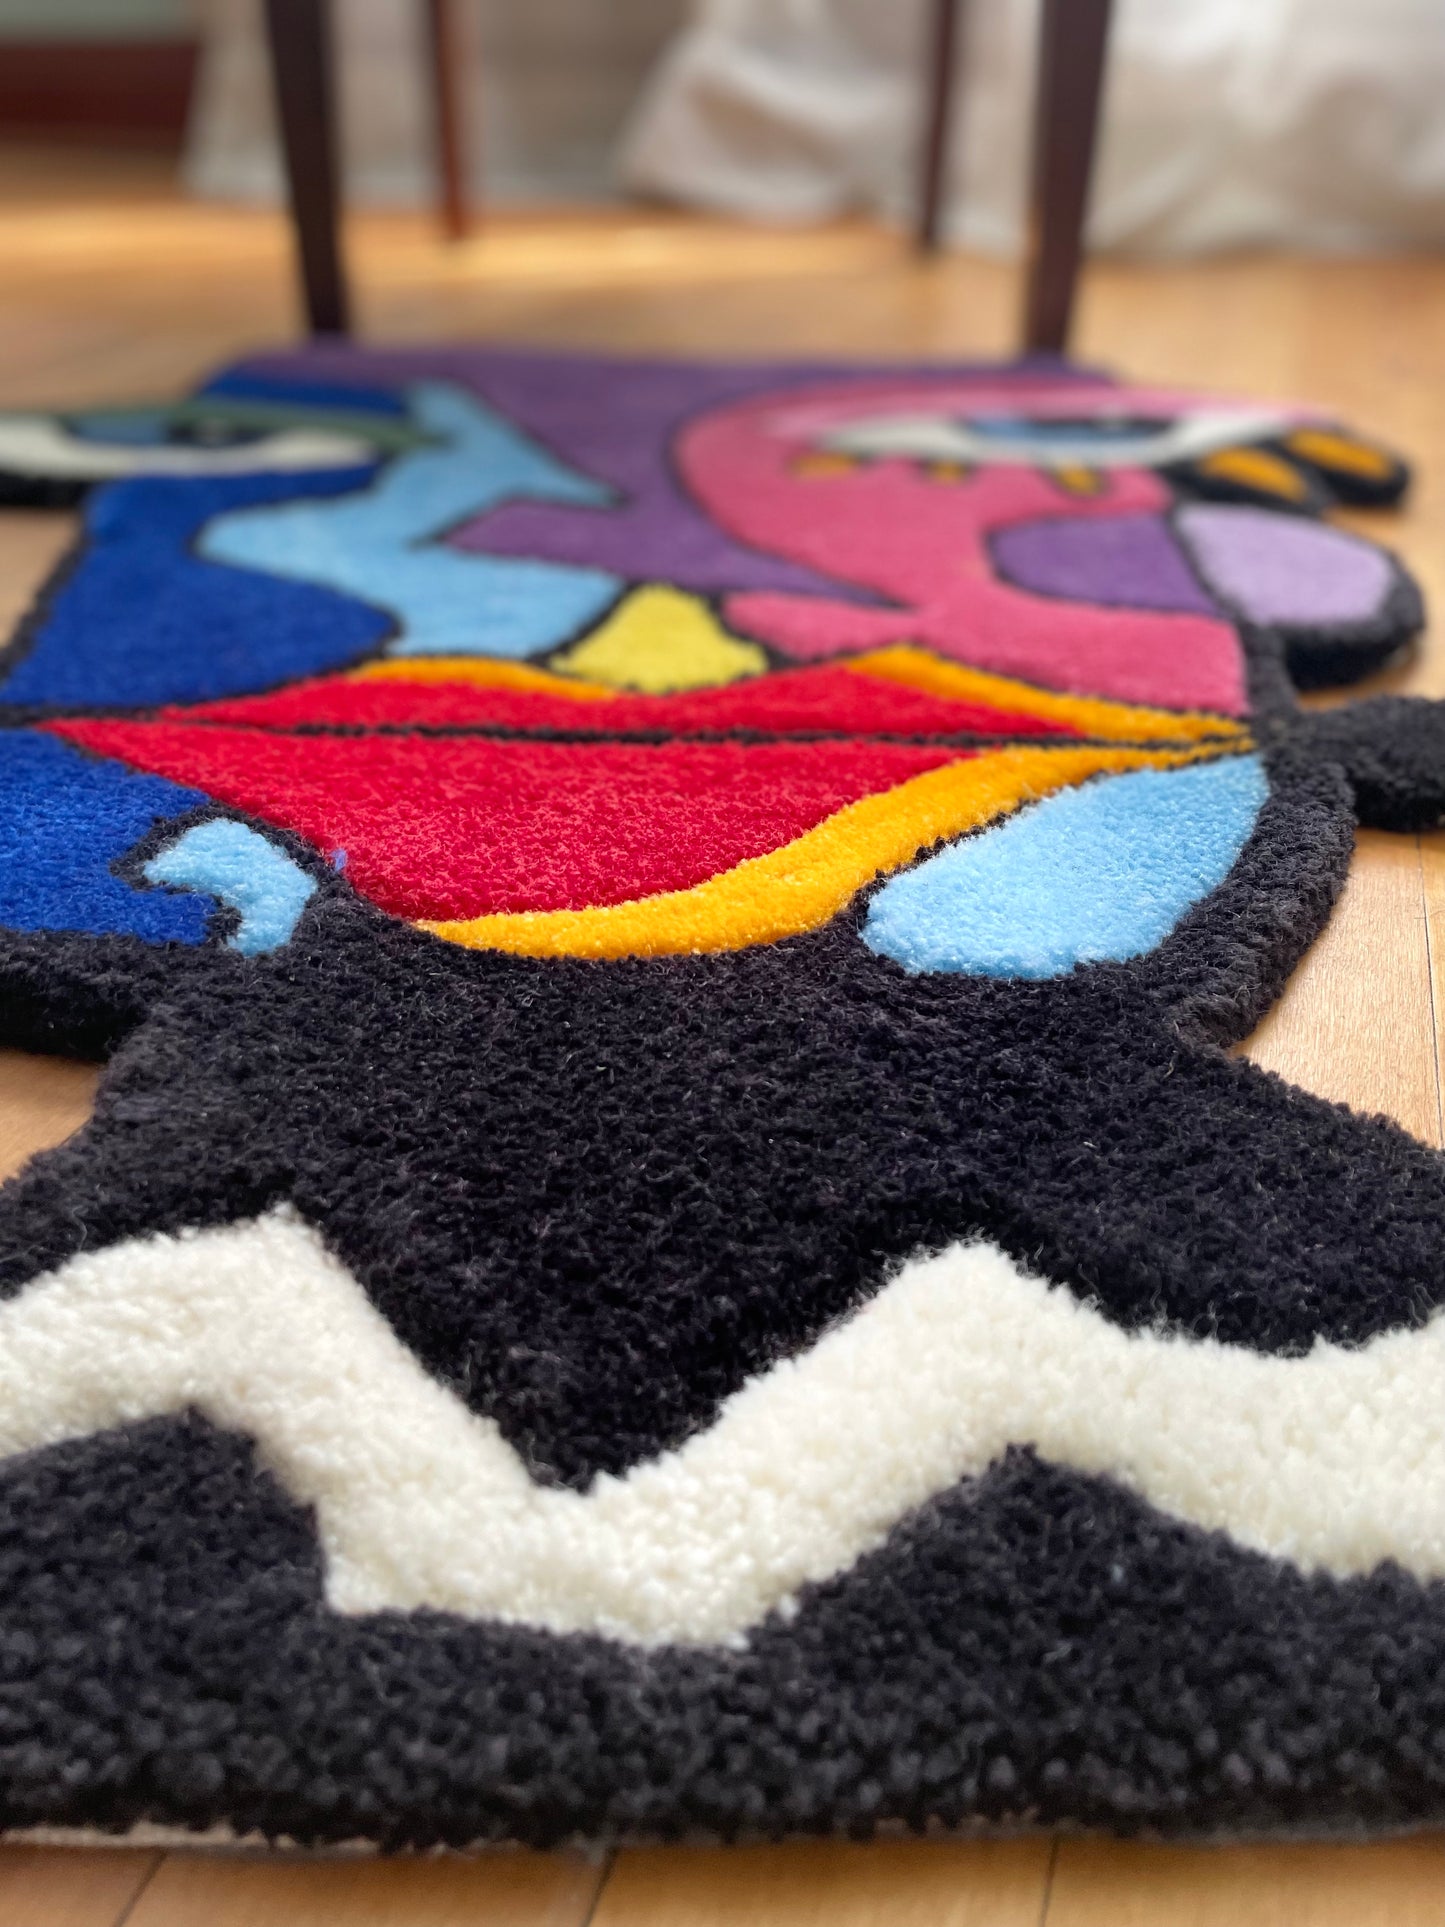 Abstract art - Handmade tufted rug - Acrylic + 100% Wool Blend - Home decor carpet